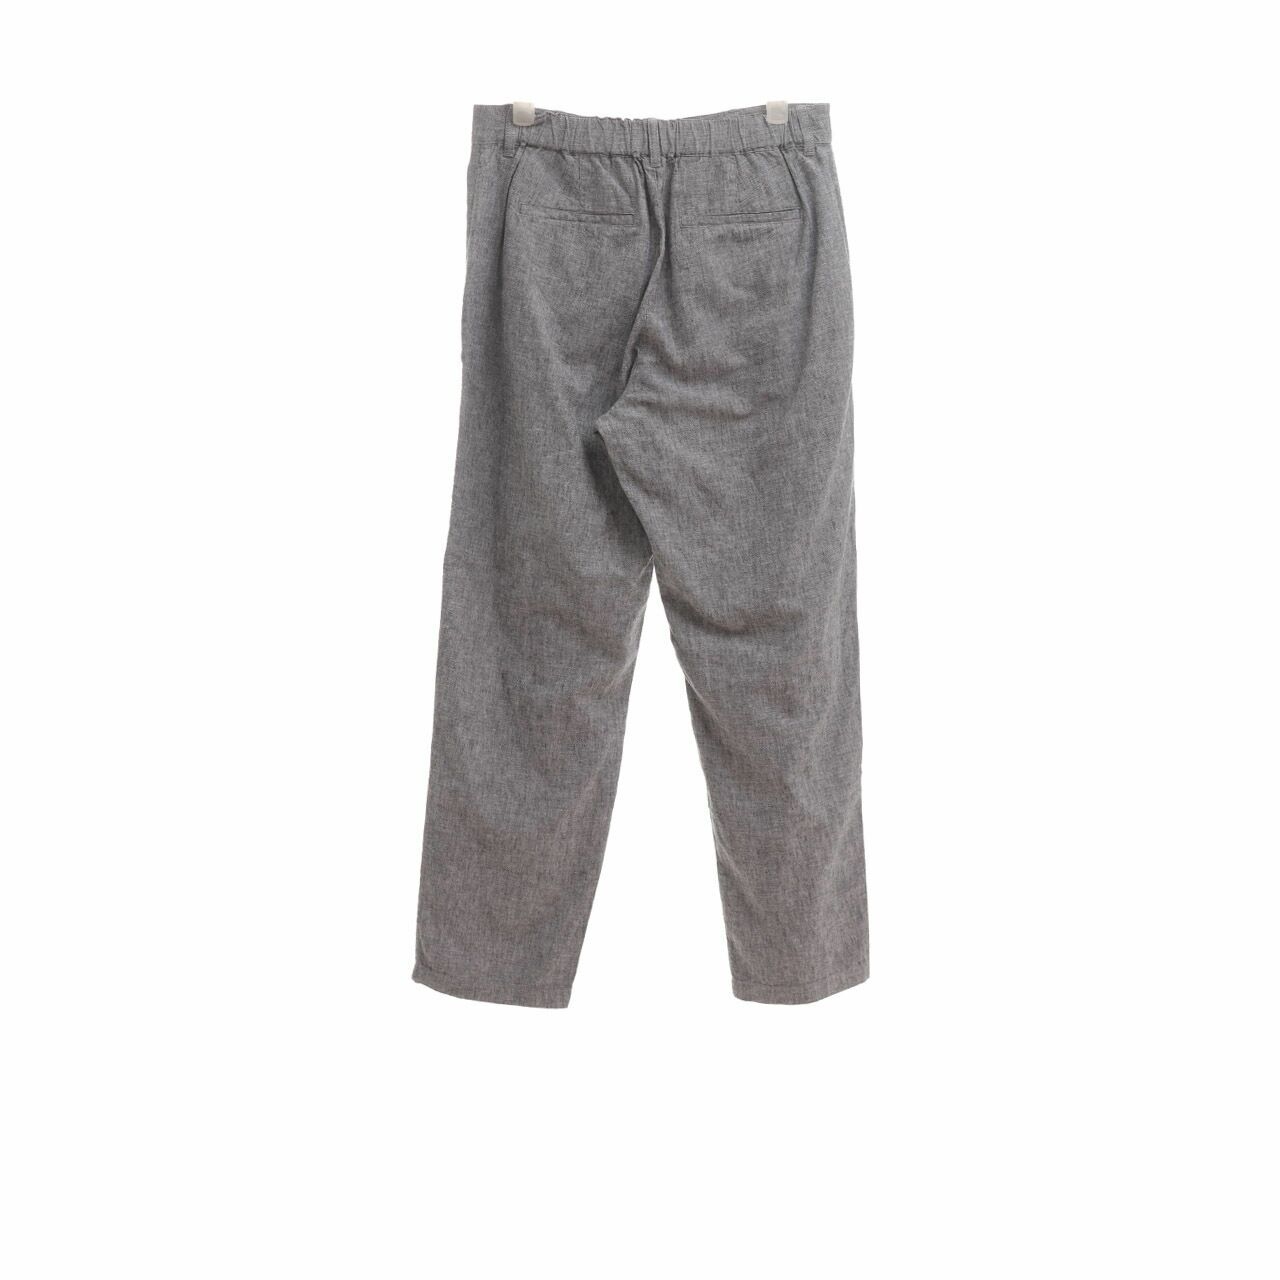 UNIQLO Grey Long Pants 